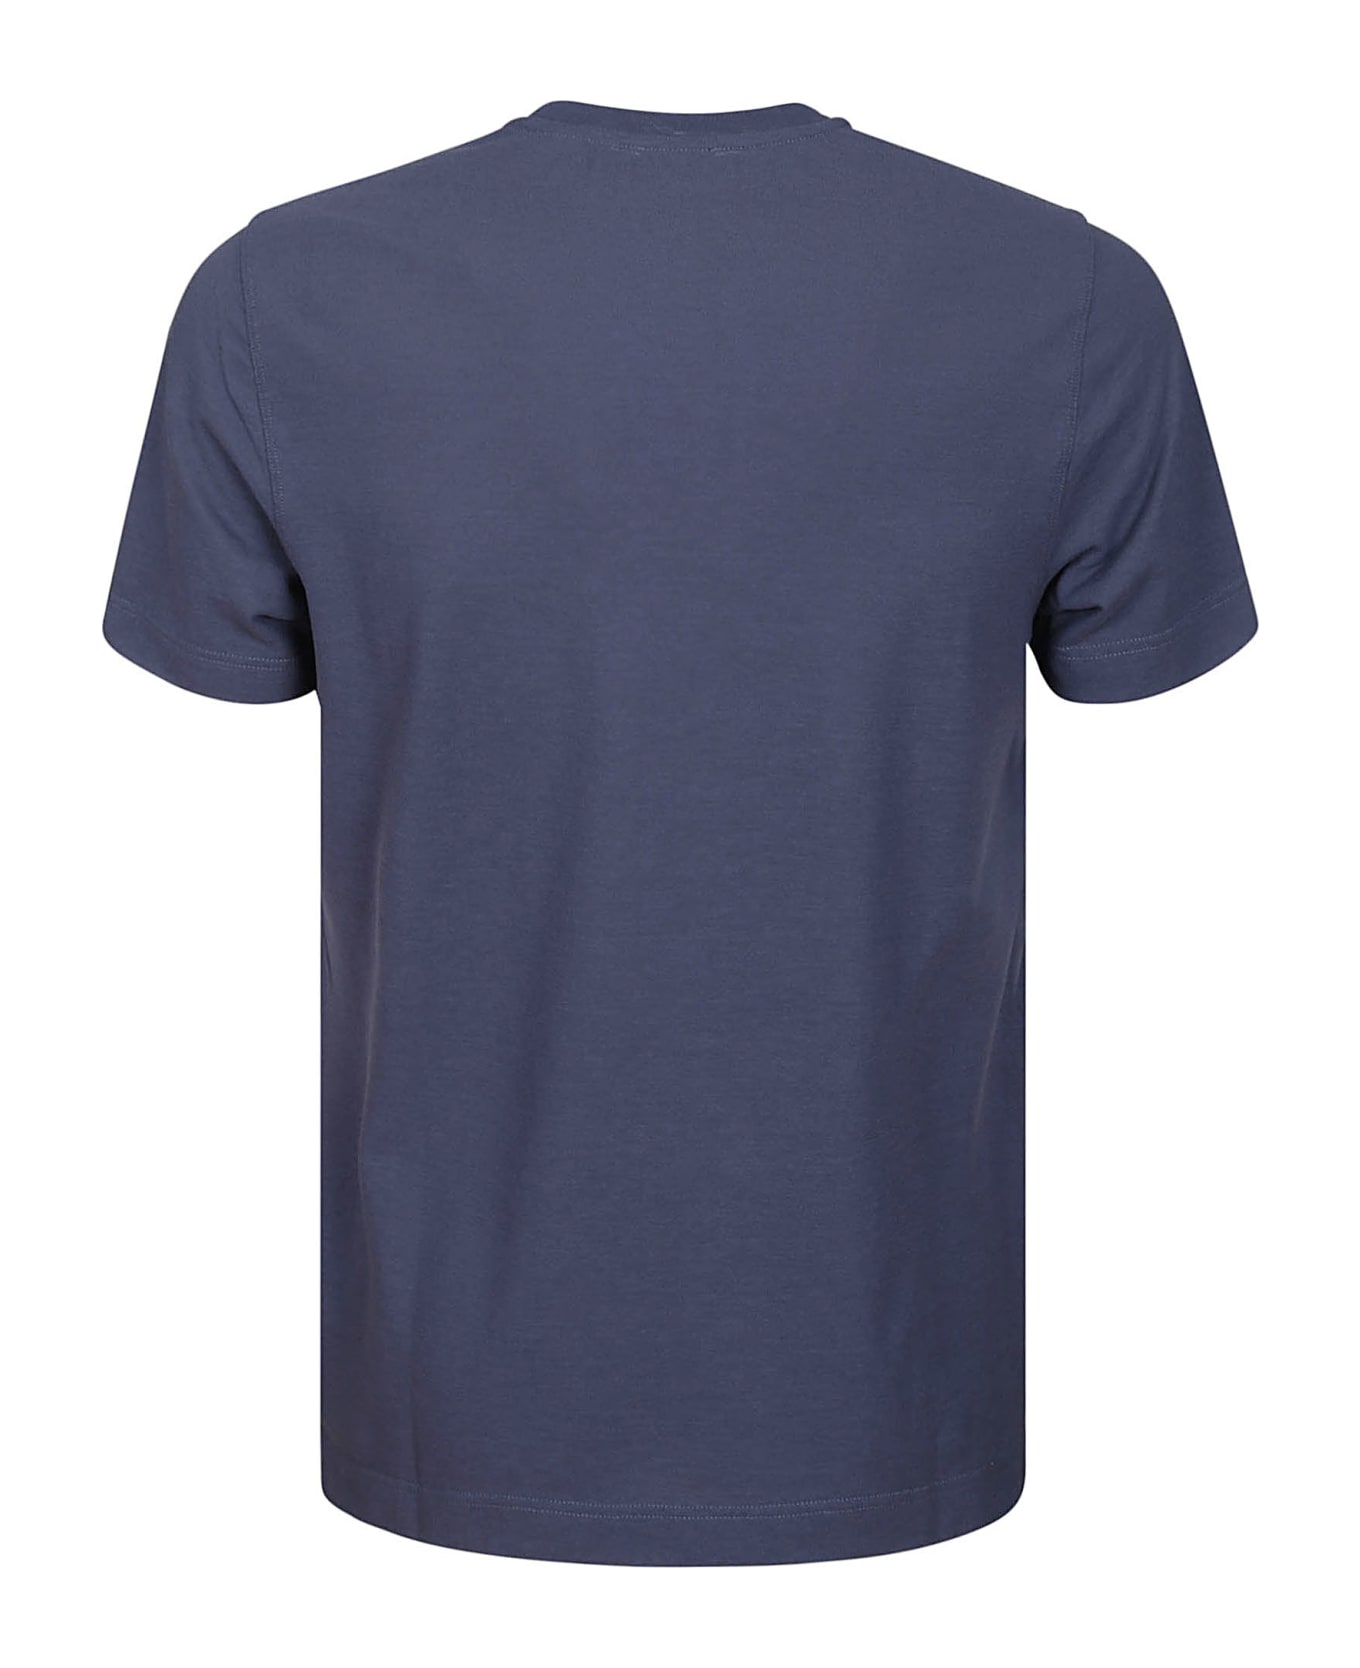 Zanone Tshirt Ice Cotton - Blue Niagara シャツ